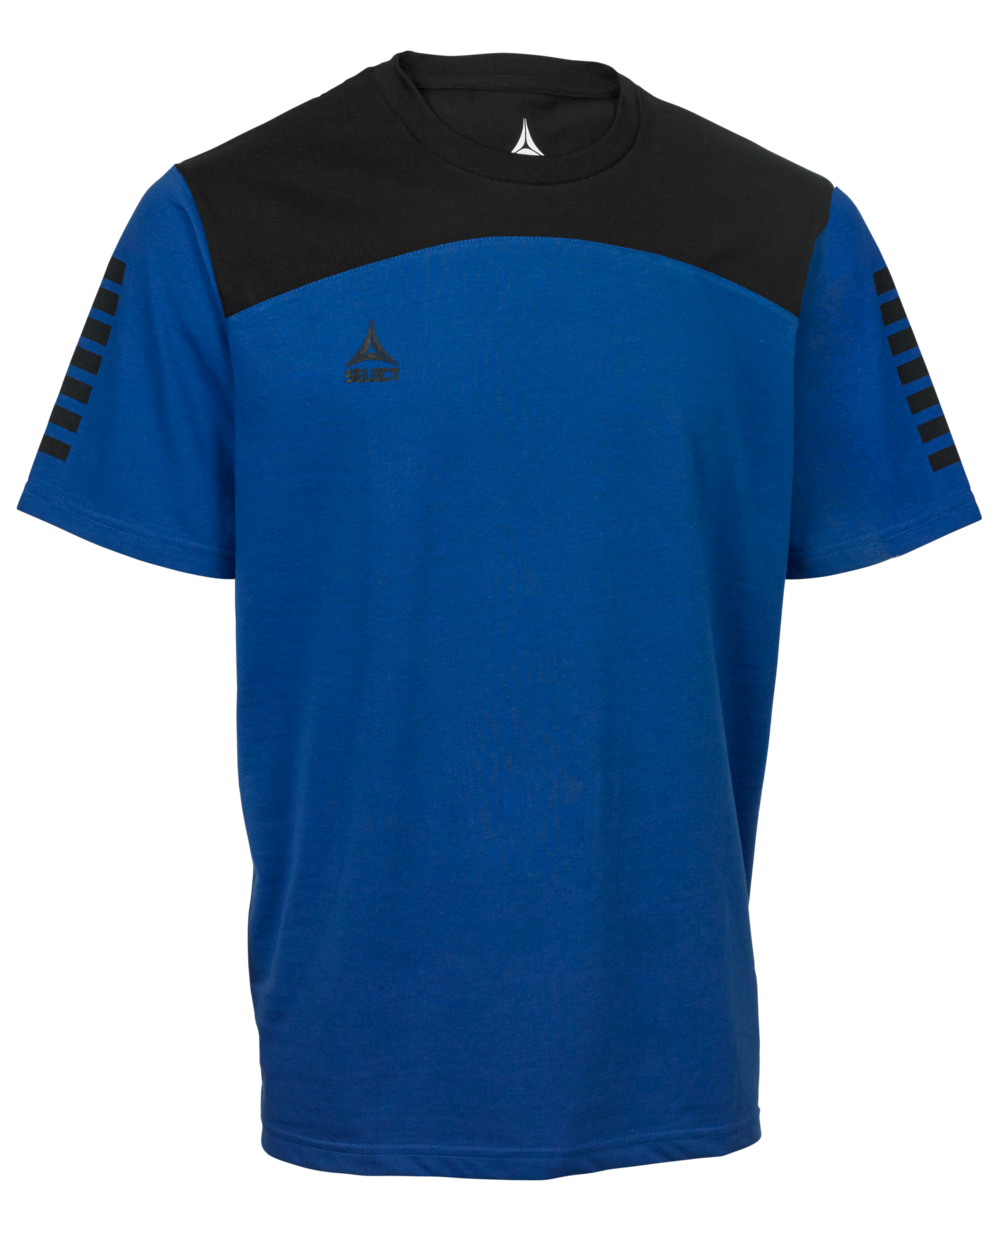 t-shirt_oxford_blue-black